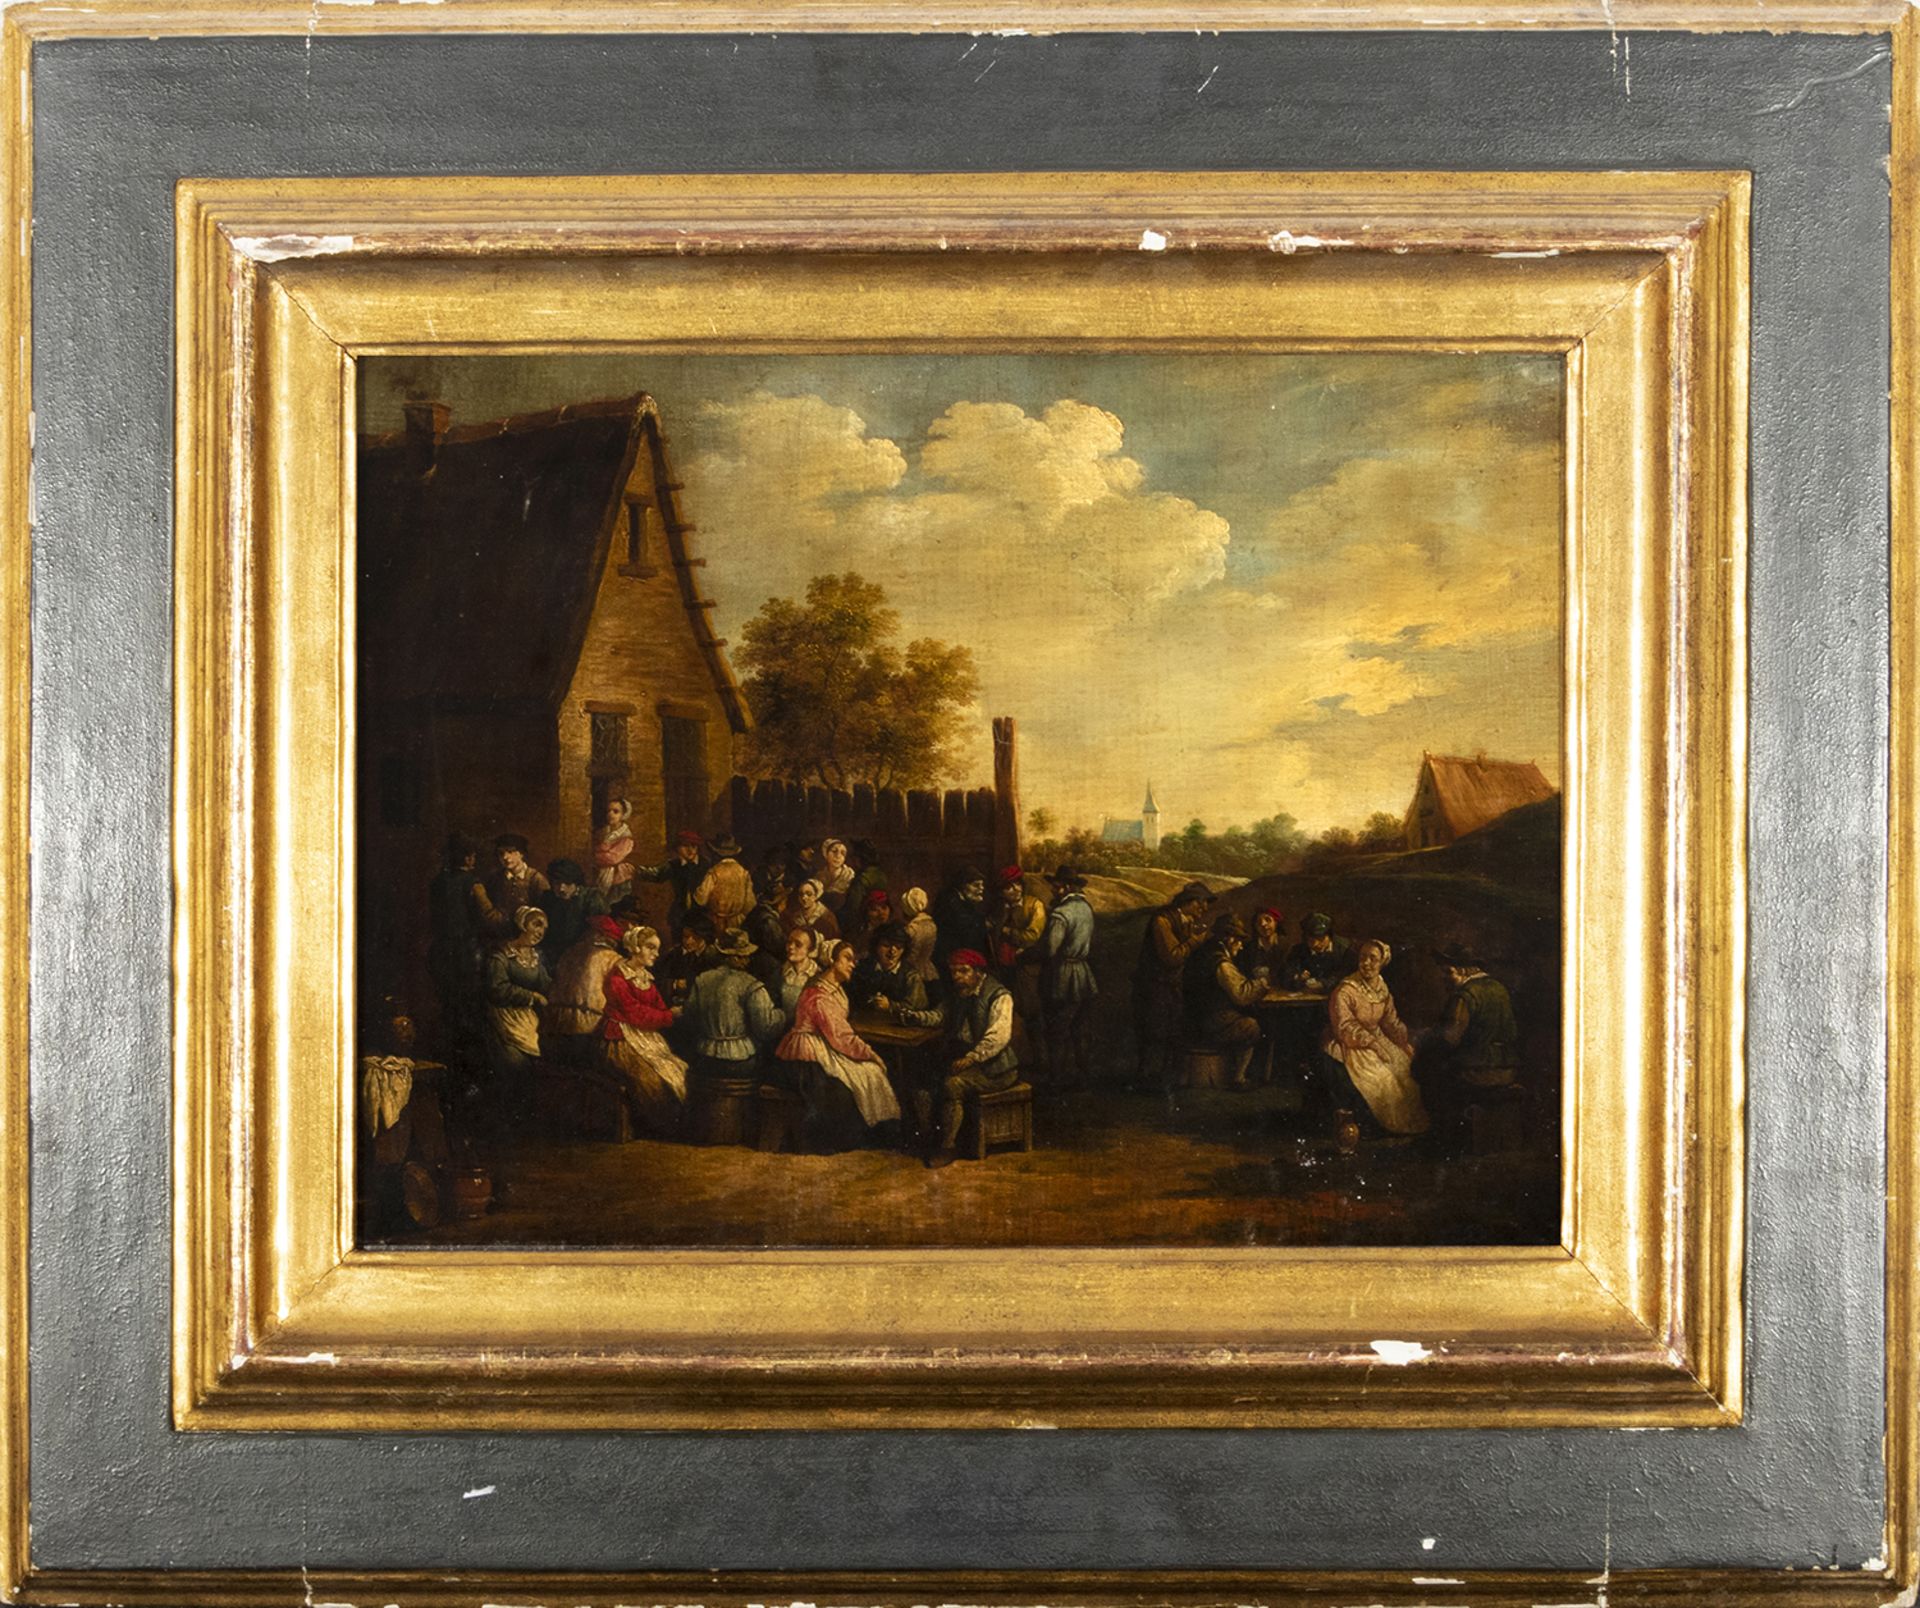 Dutch school, 17th century. Follower of David Teniers. The Village Feast.